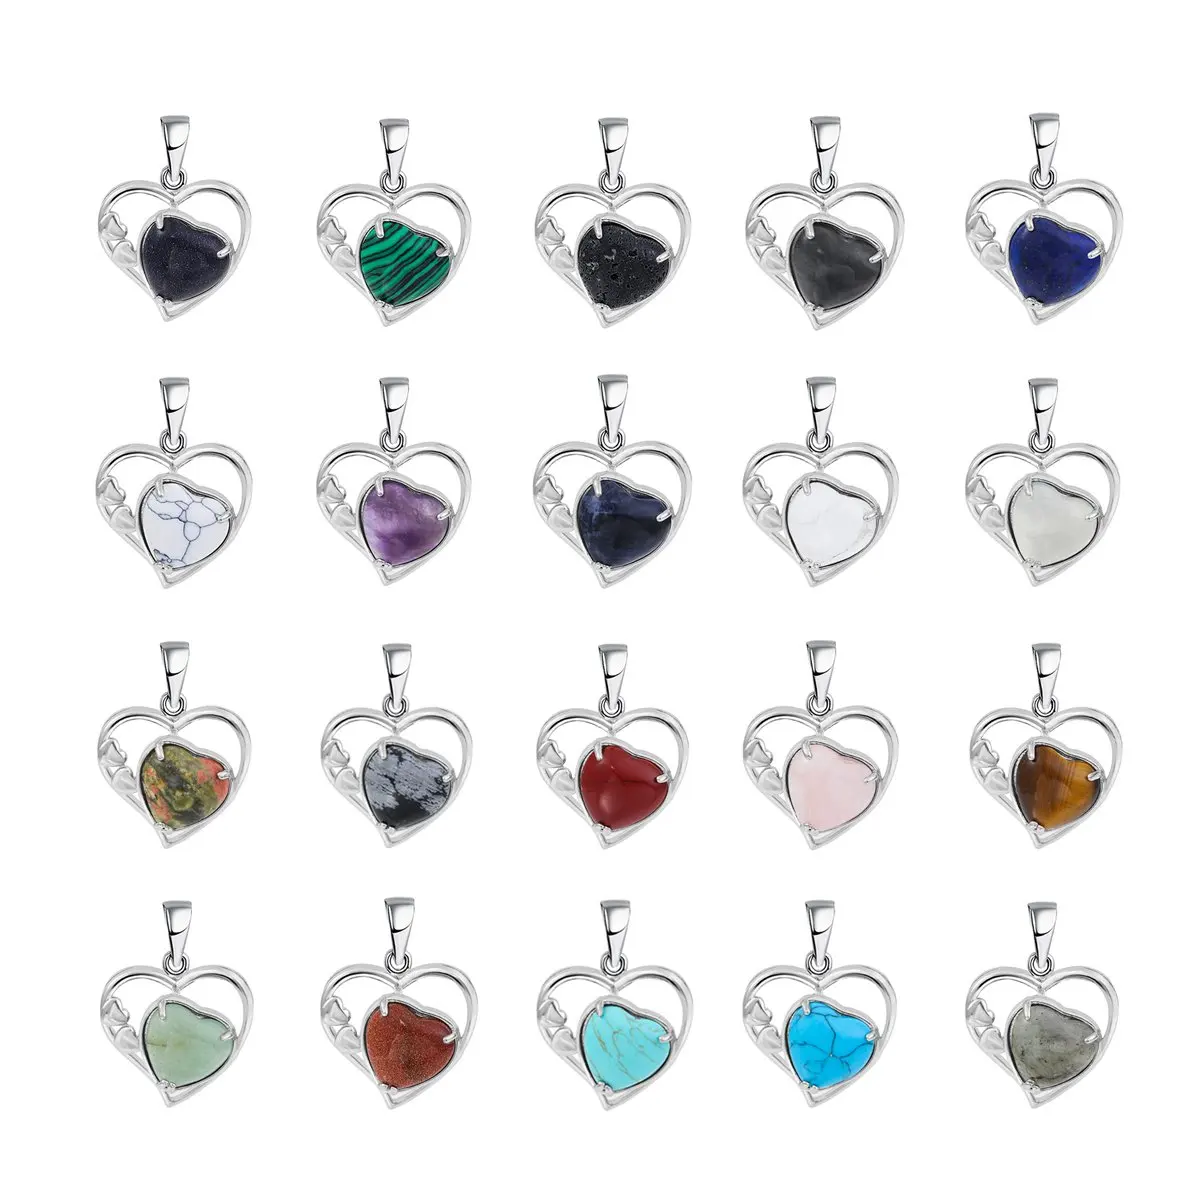 

JOYA GIFT Love Heart Birthstone Pendant for DIY Making Jewelry Necklace Forever Gemstone Jewelry Valentine's Day Anniversary